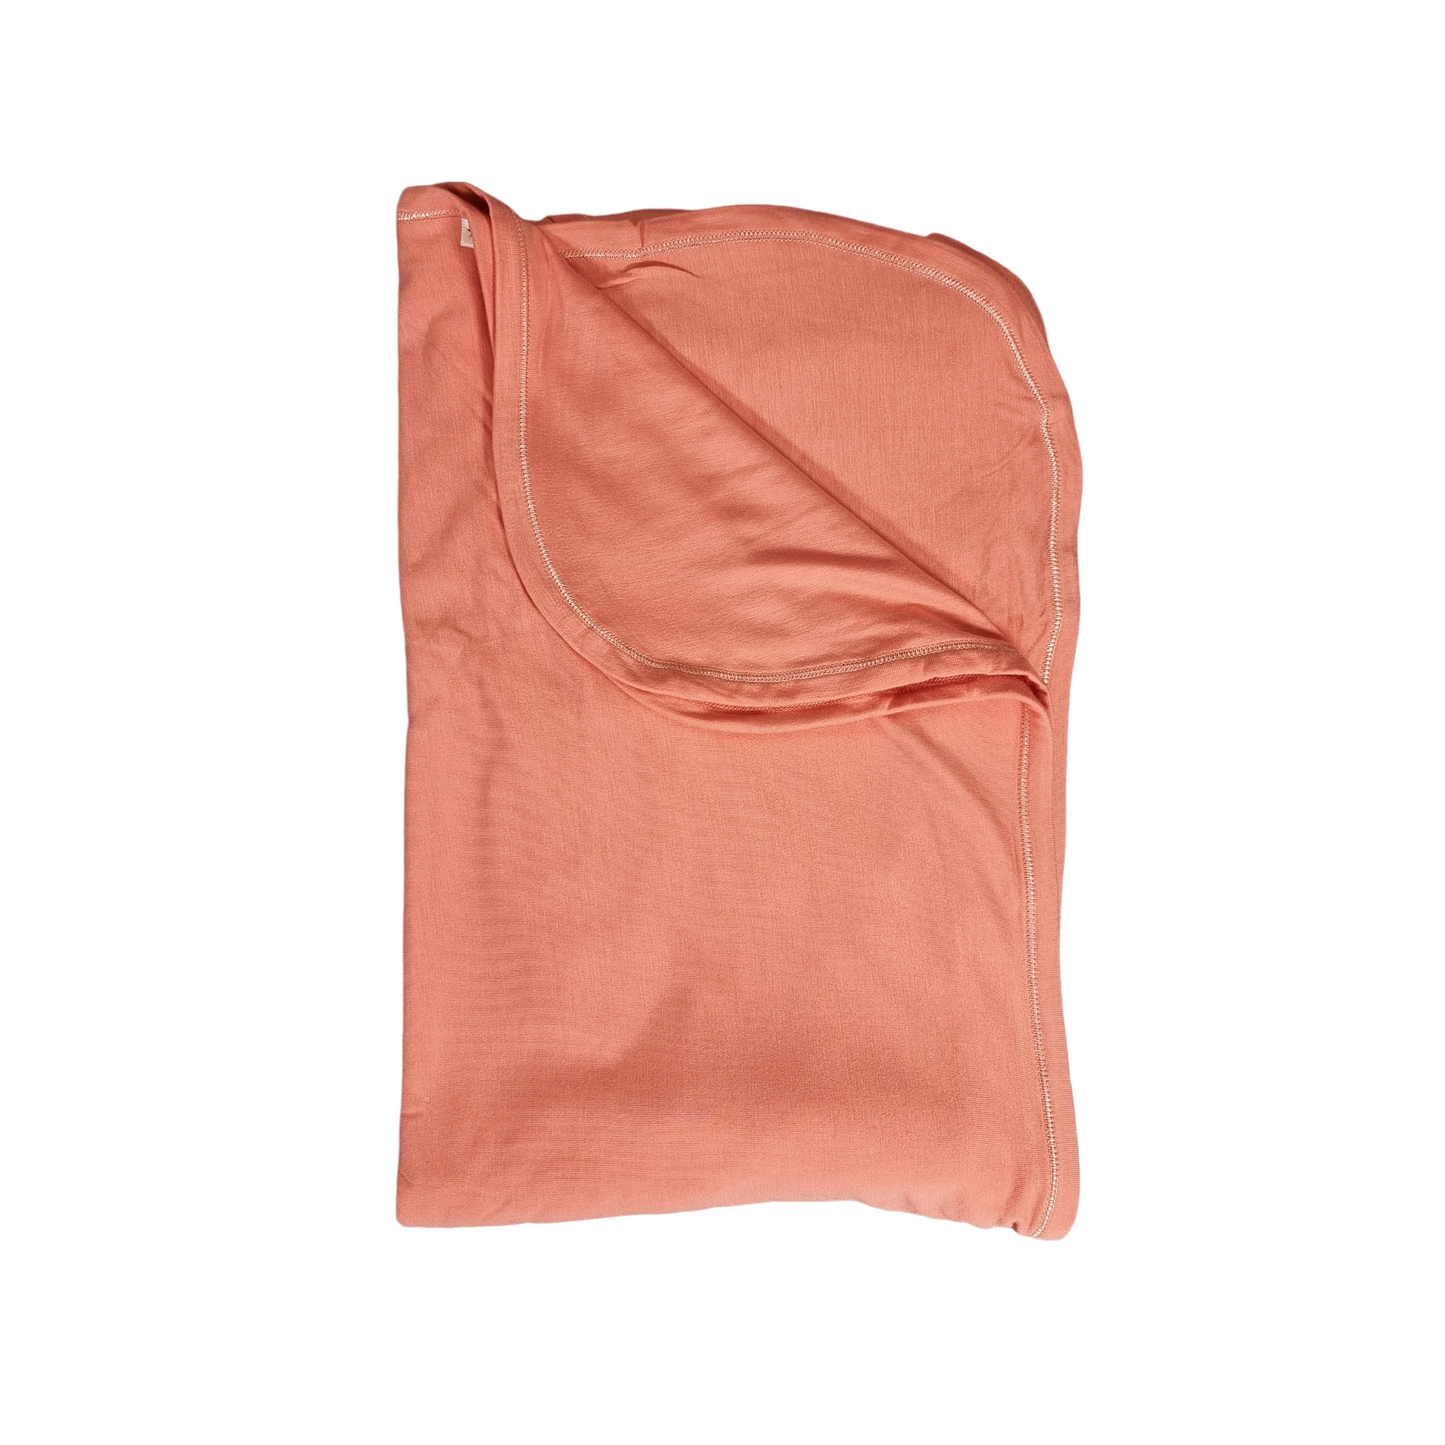 Coral - Baby Bedding Blanket (120 x 120 cm)